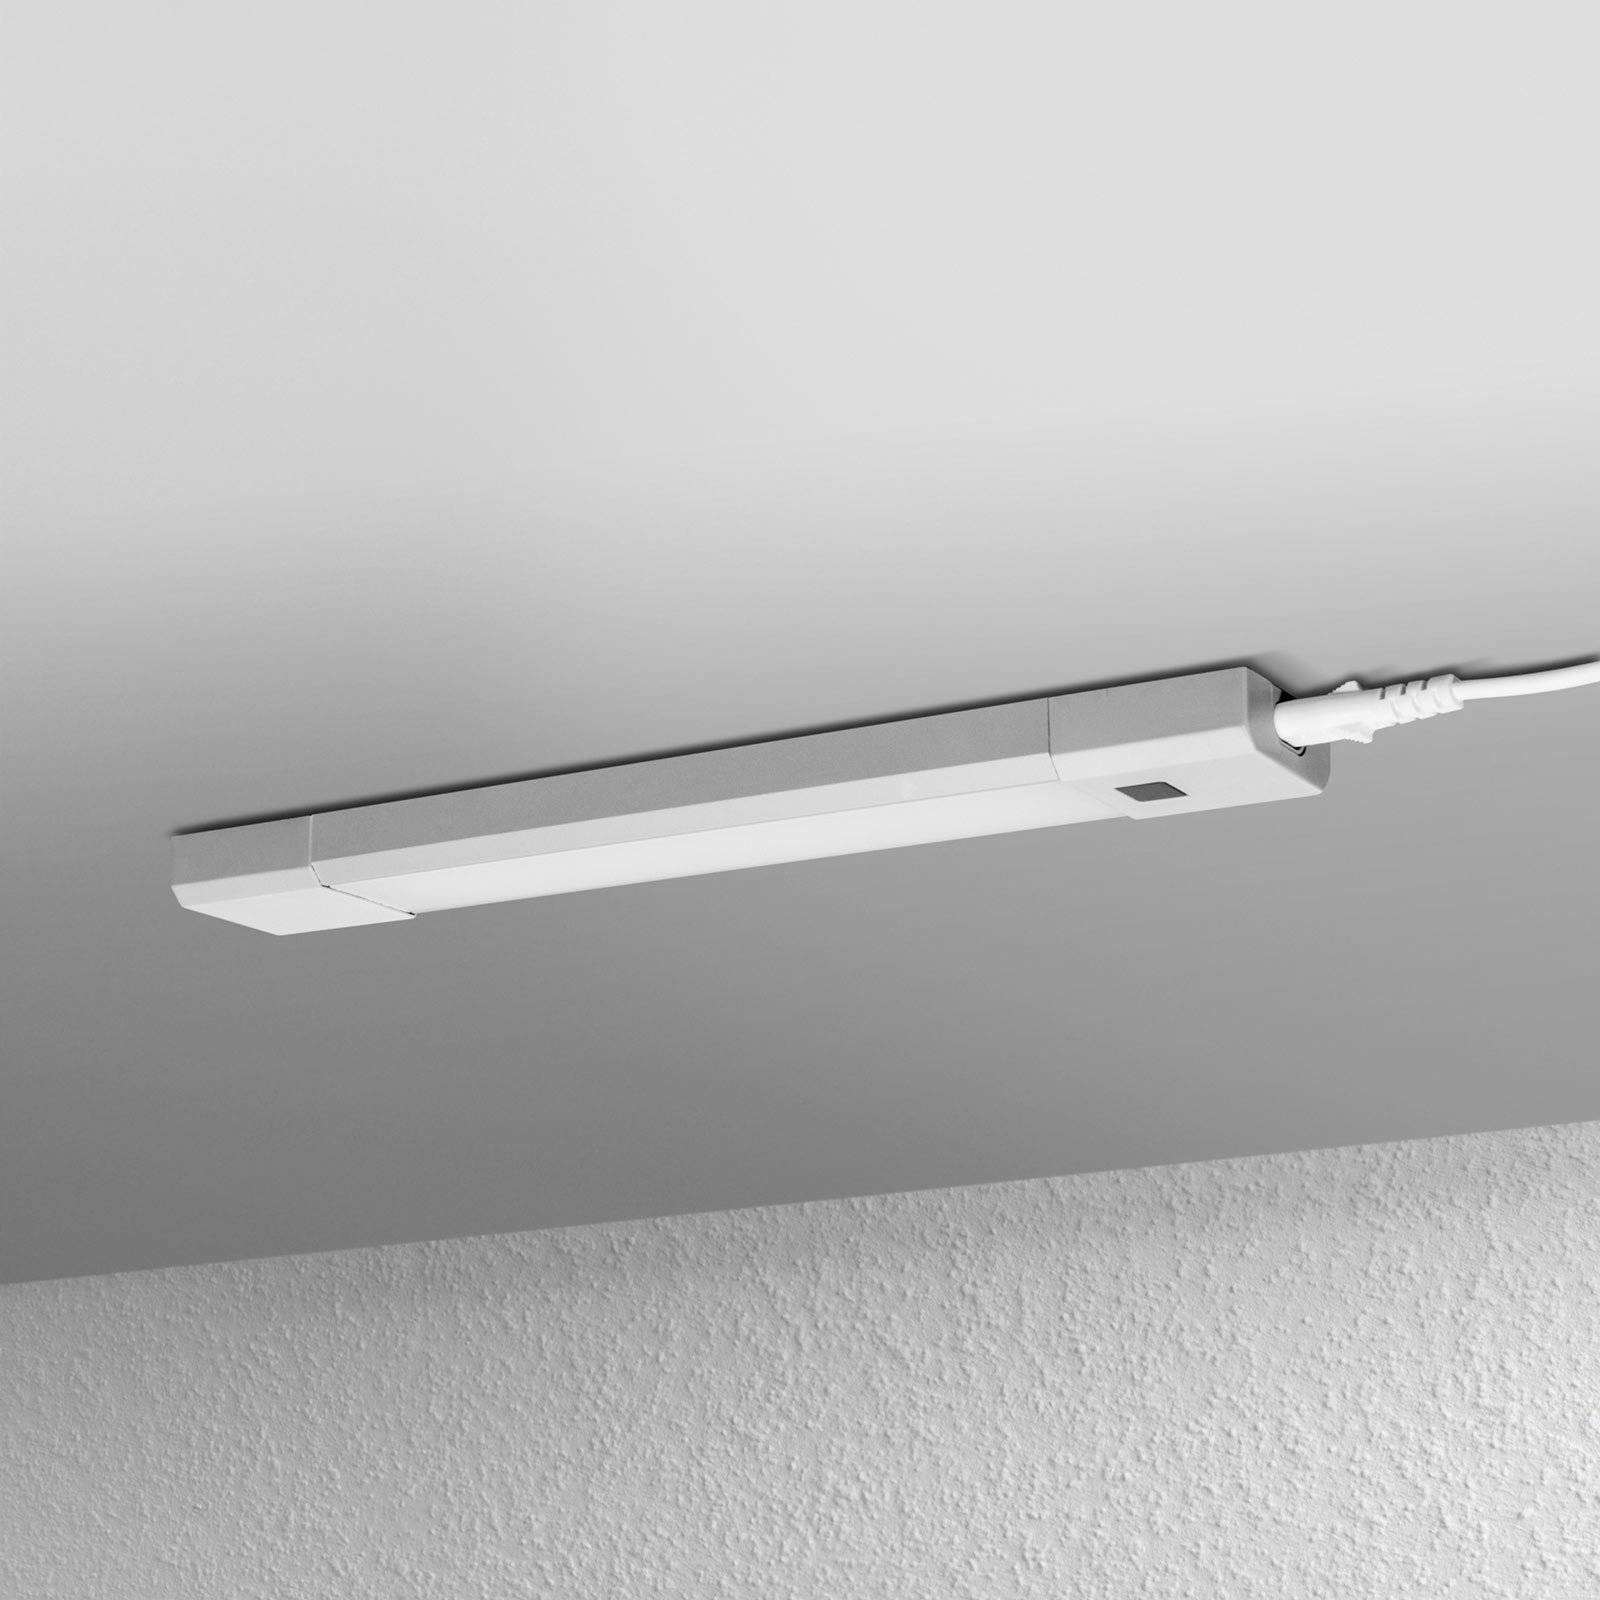 LEDVANCE Linear Slim LED lampada da mobili, 30cm